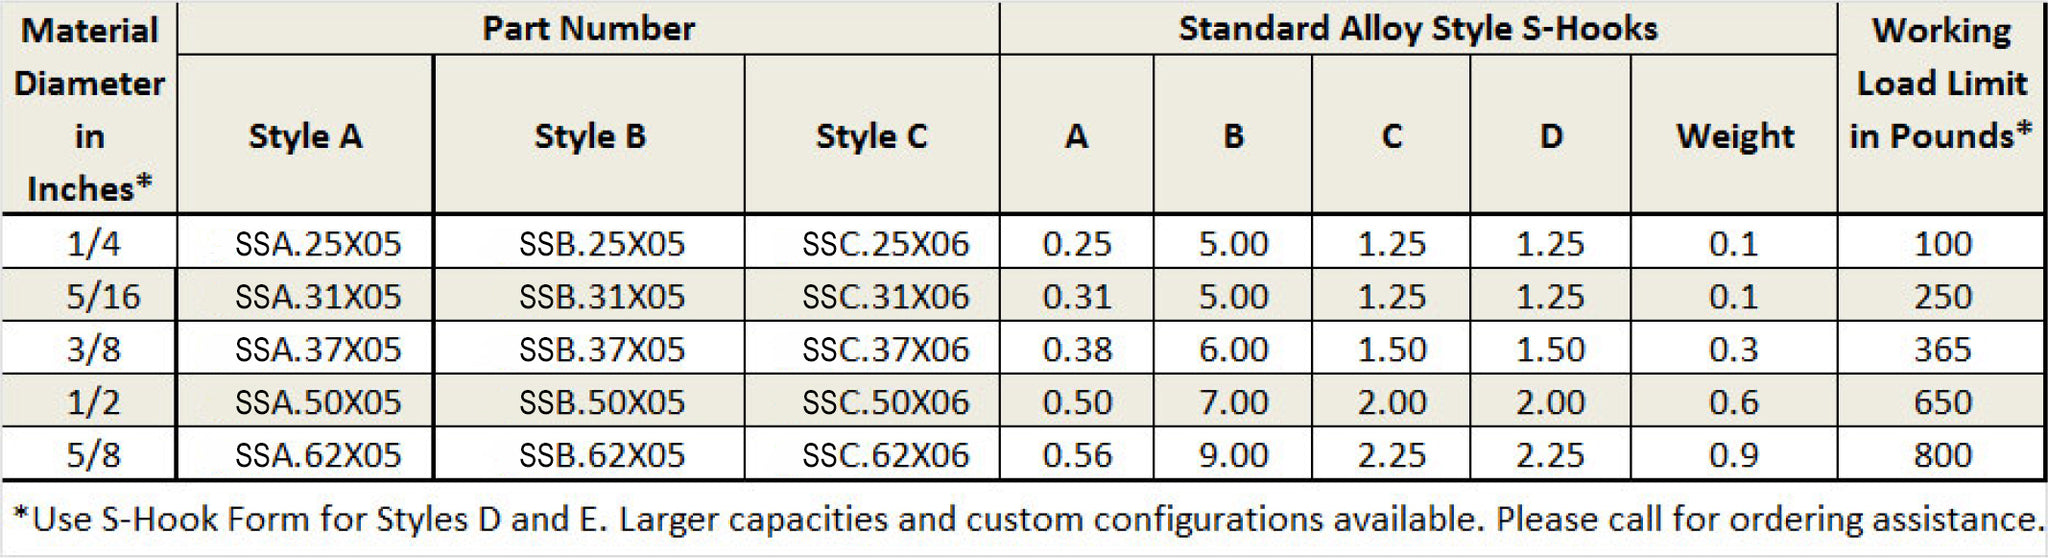 Lifting S-Hooks Chart - Diameters and Capacities  